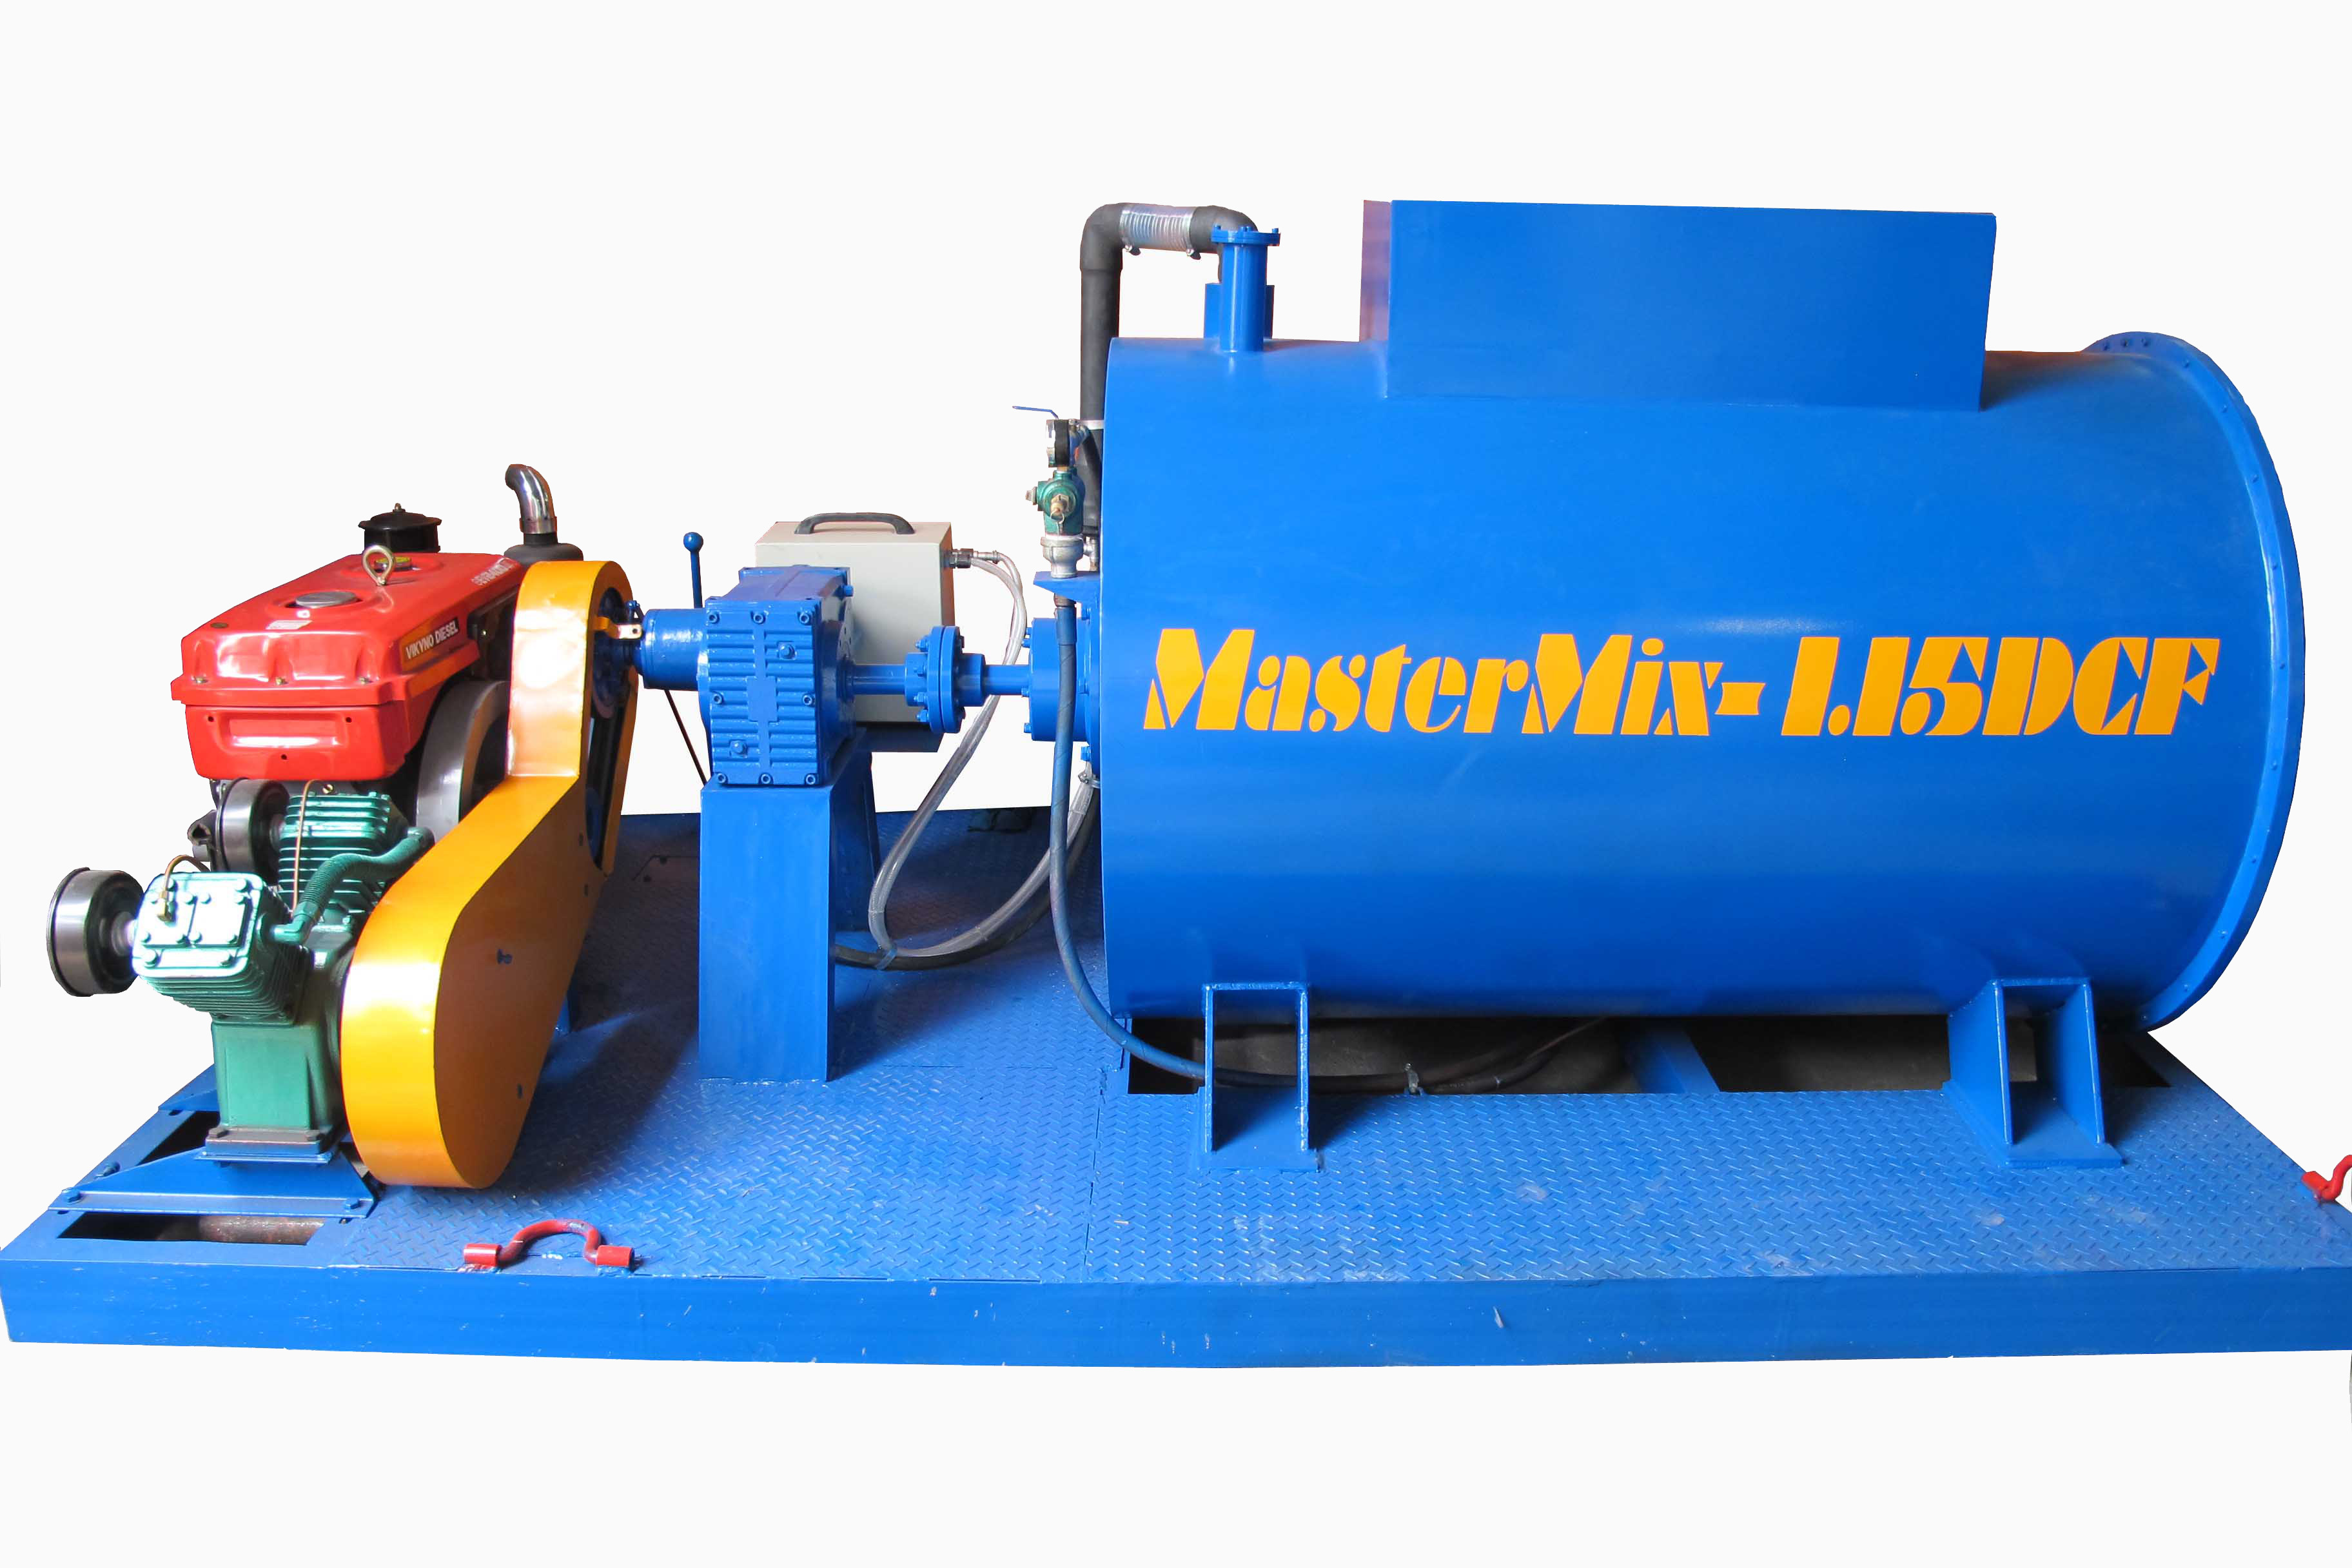 Foam Concrete Mixer Machine - MasterMix - CLC Mixer